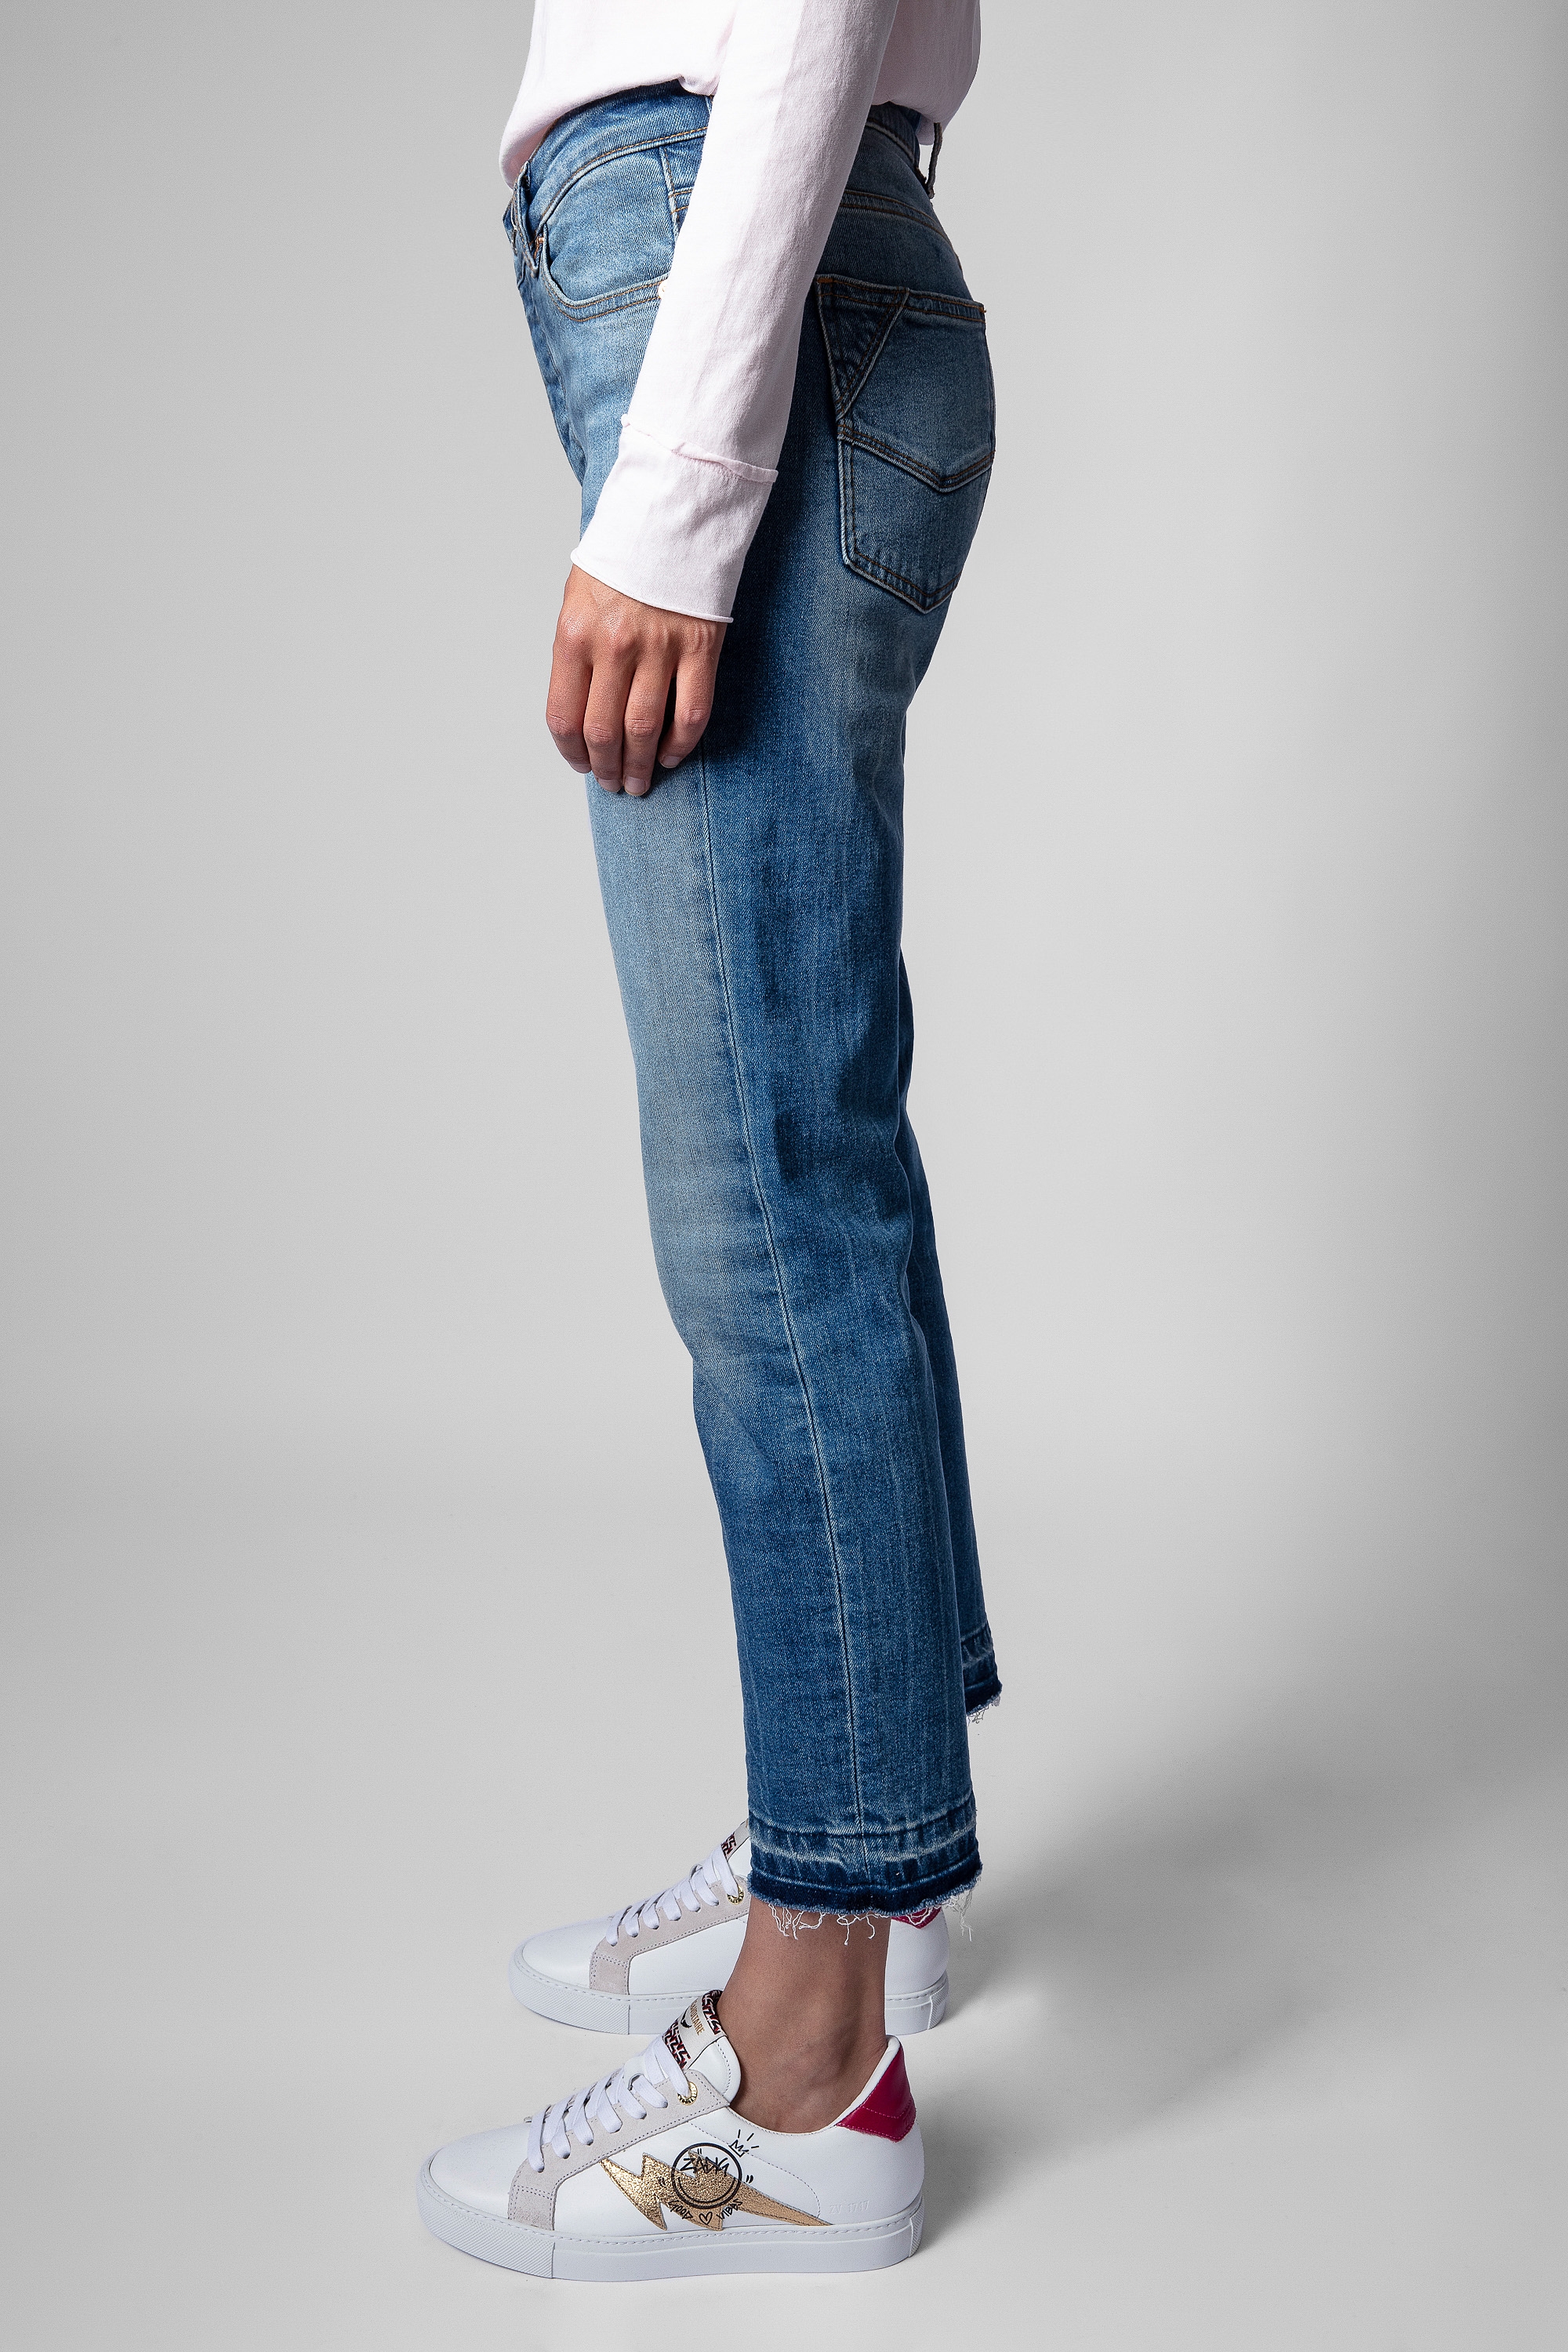 Boyfit Eco Denim Jeans